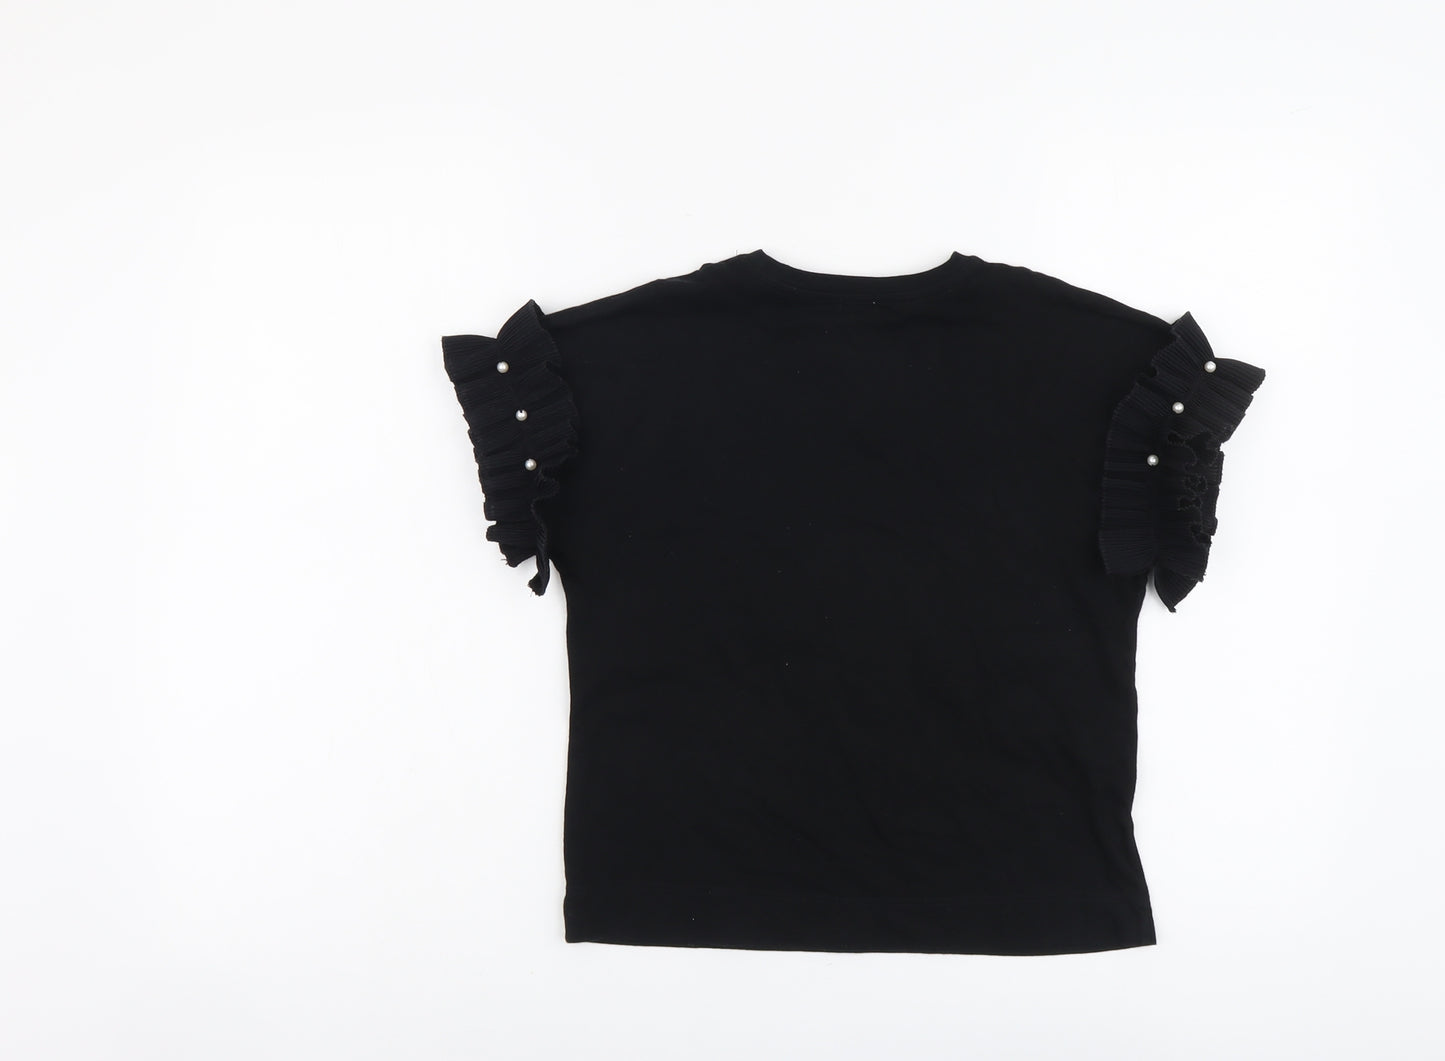 River Island Girls Black Cotton Basic T-Shirt Size 7-8 Years Round Neck Pullover - Always Be Sassy